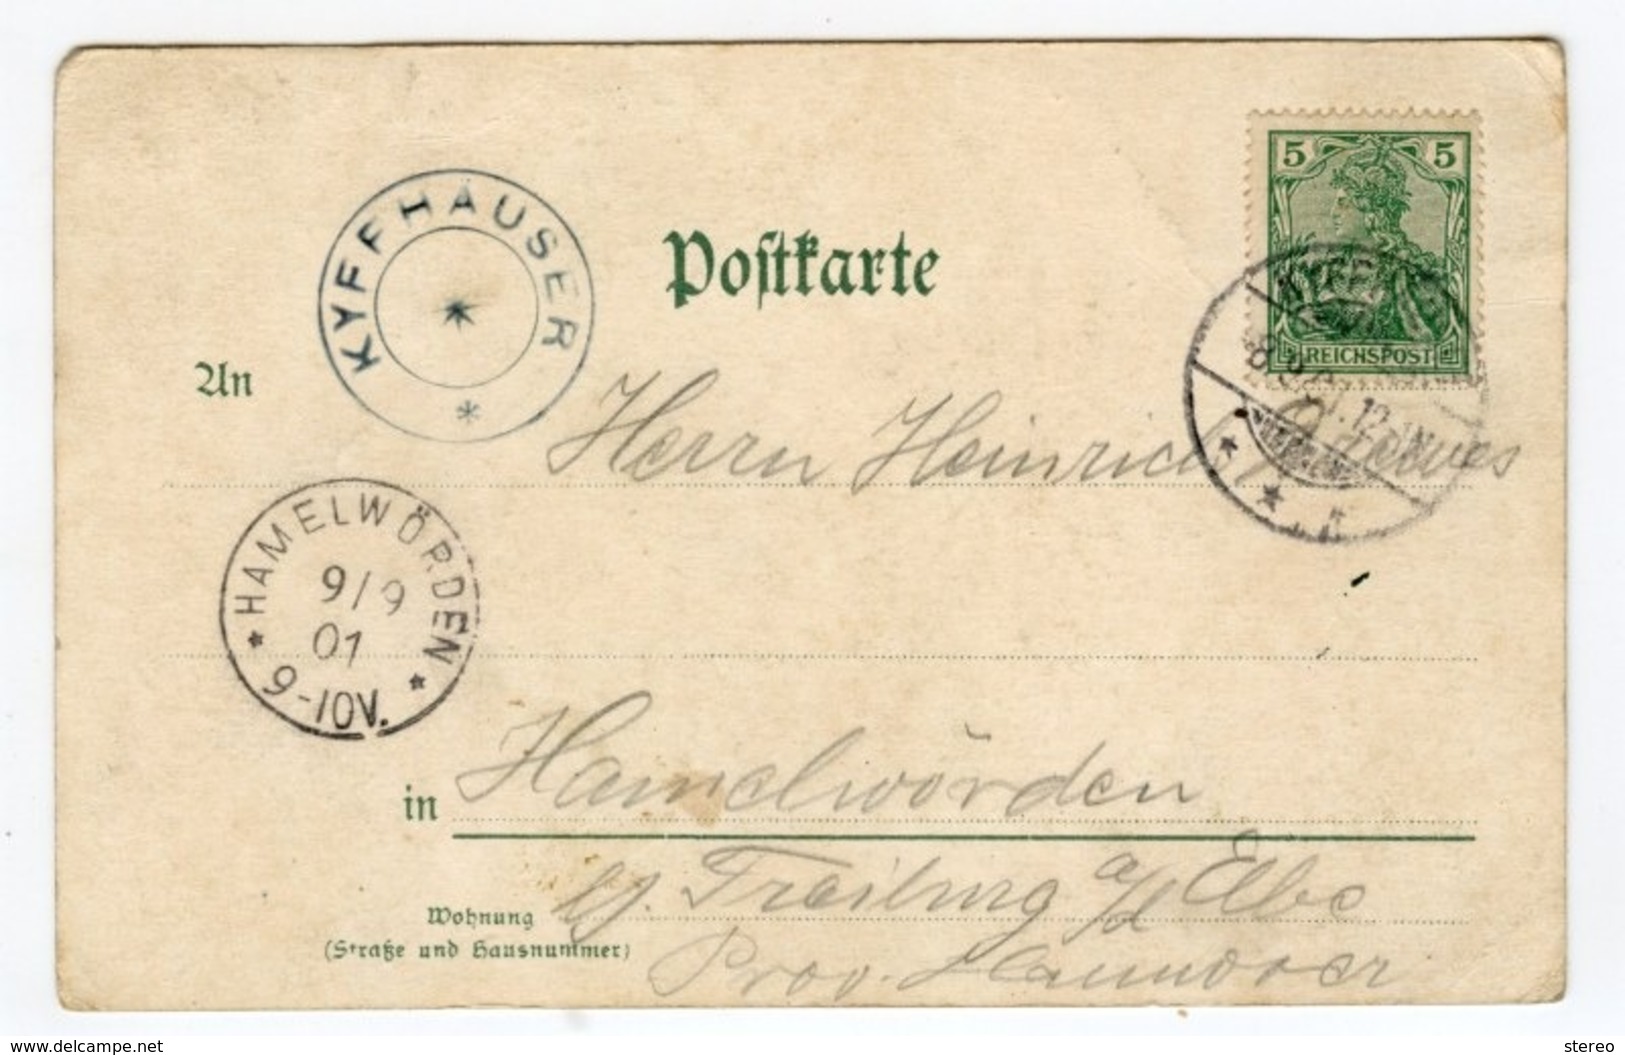 Kyffhäuser Postcard Germany Litho Gruss 1901 - Kyffhaeuser